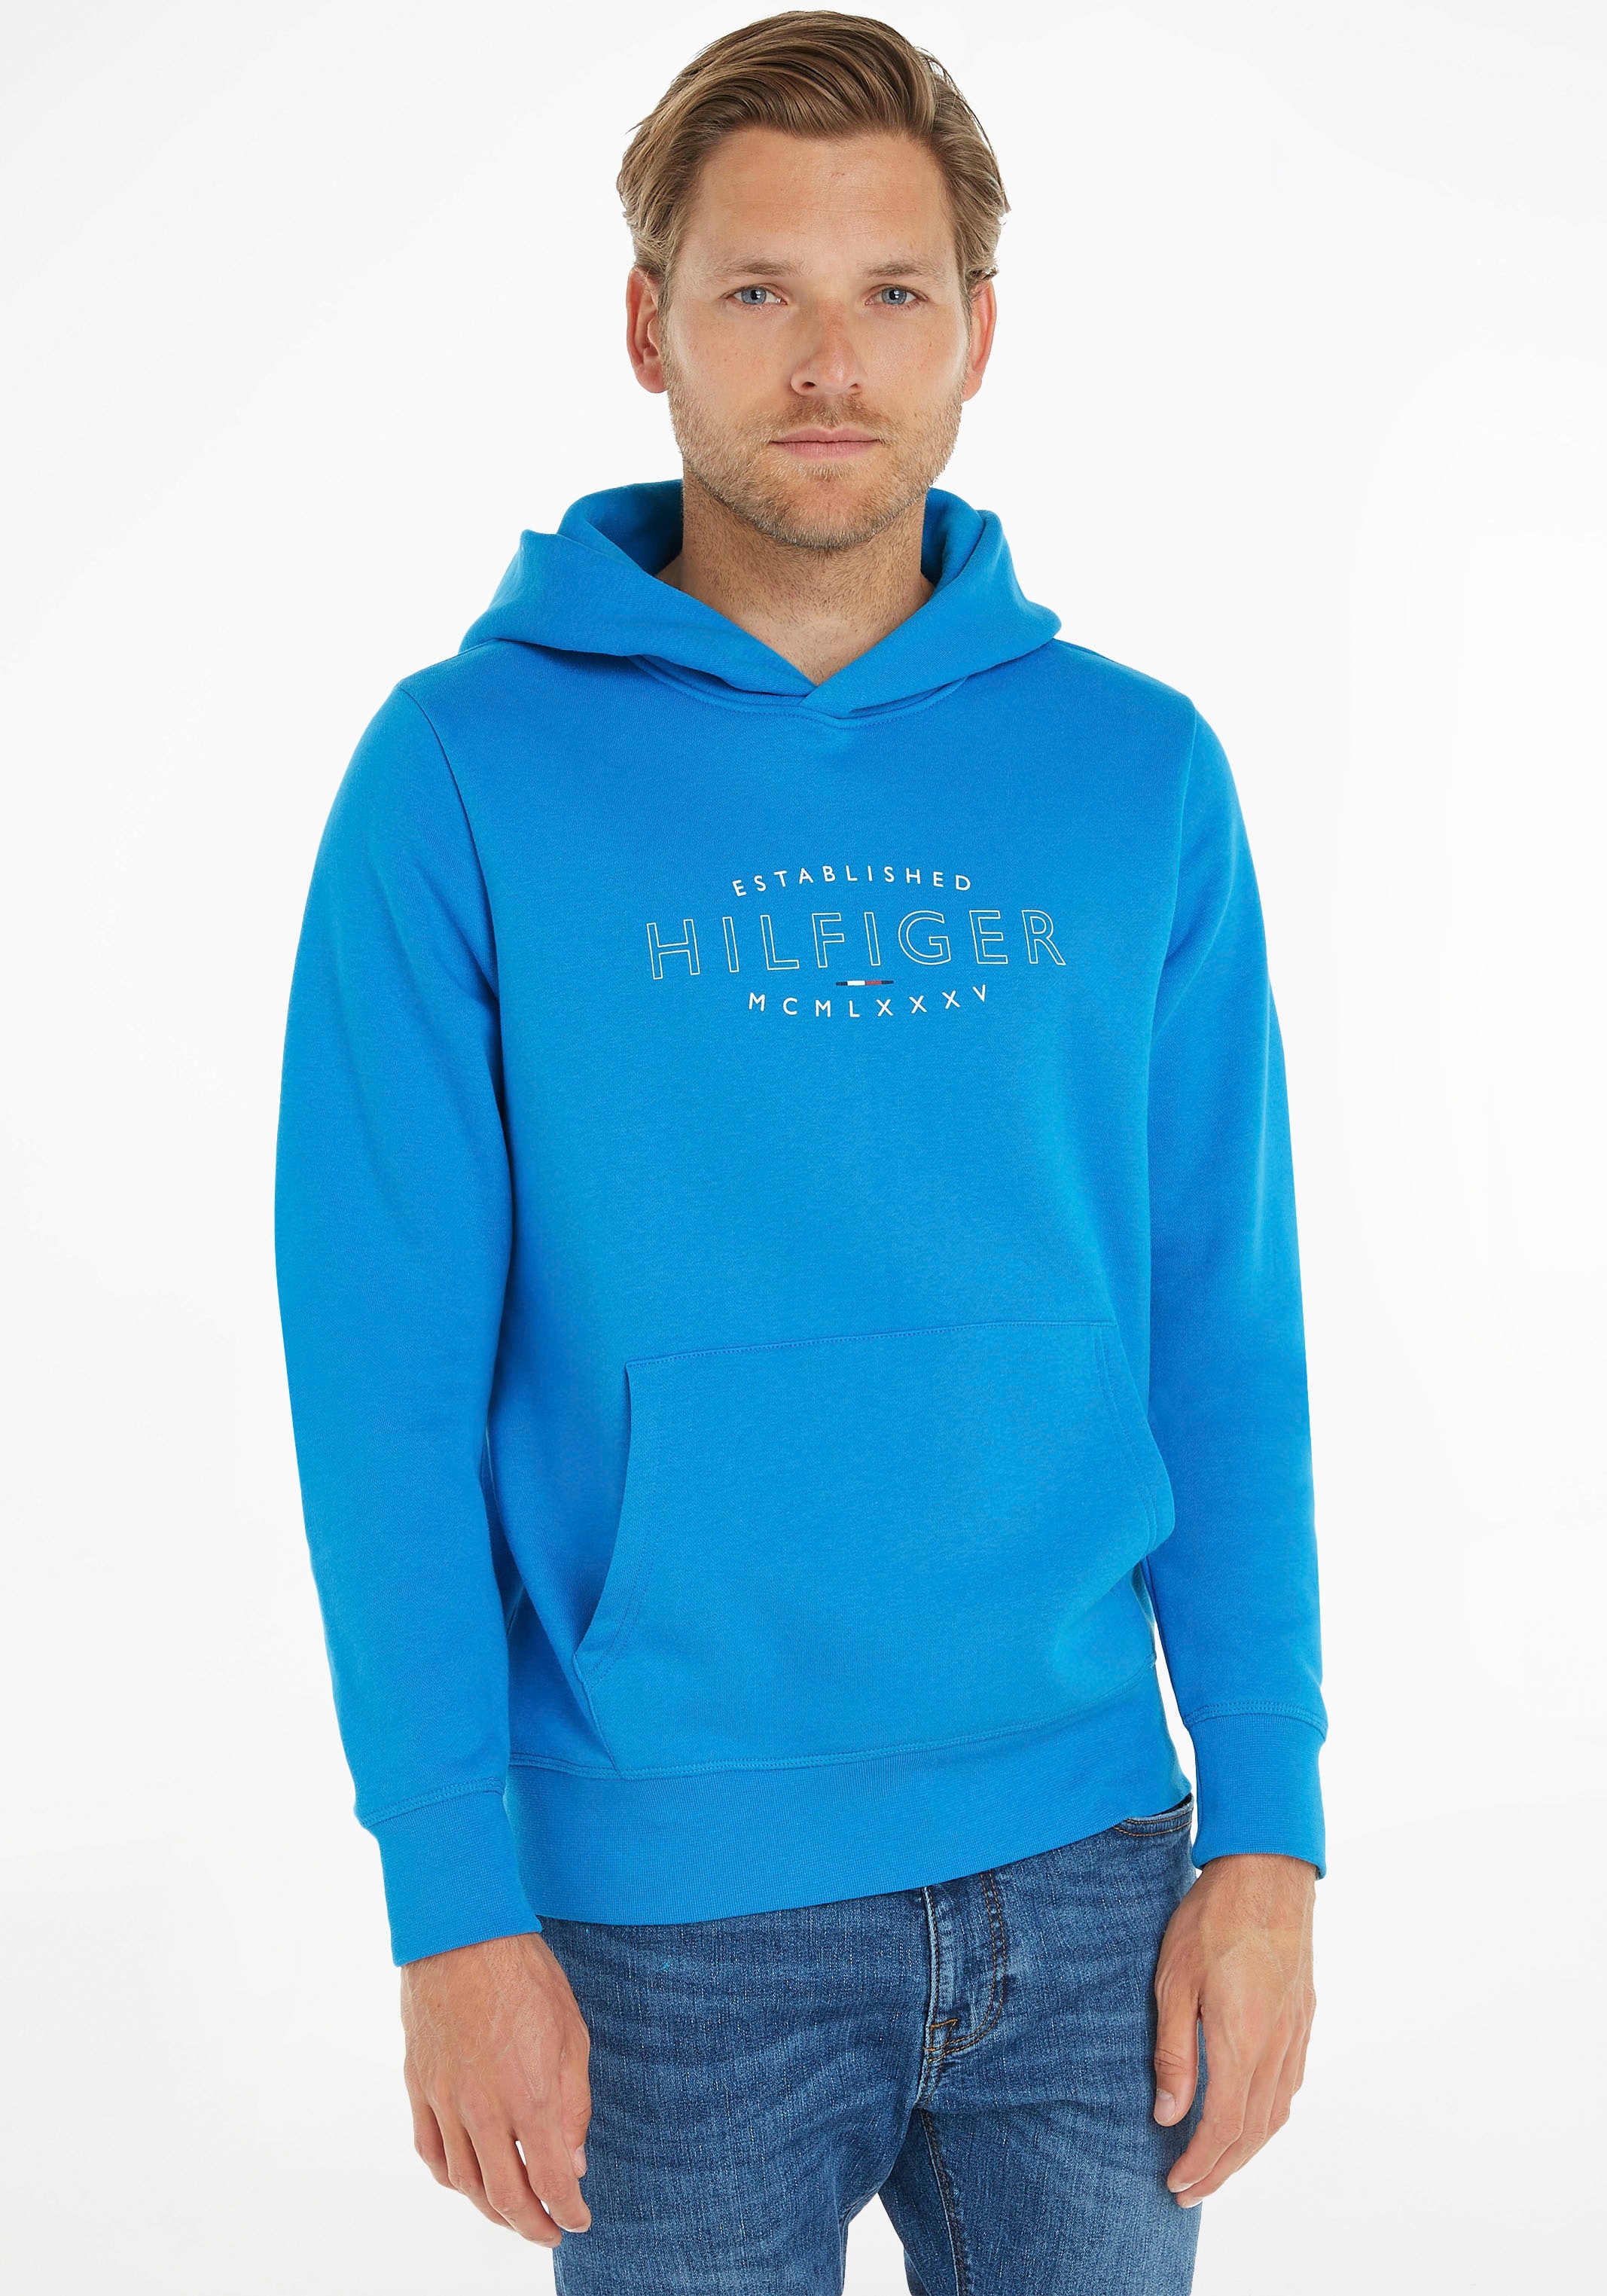 Tommy Hilfiger CURVE OTTO shoppen online »HILFIGER bei HOODY« LOGO Kapuzensweatshirt